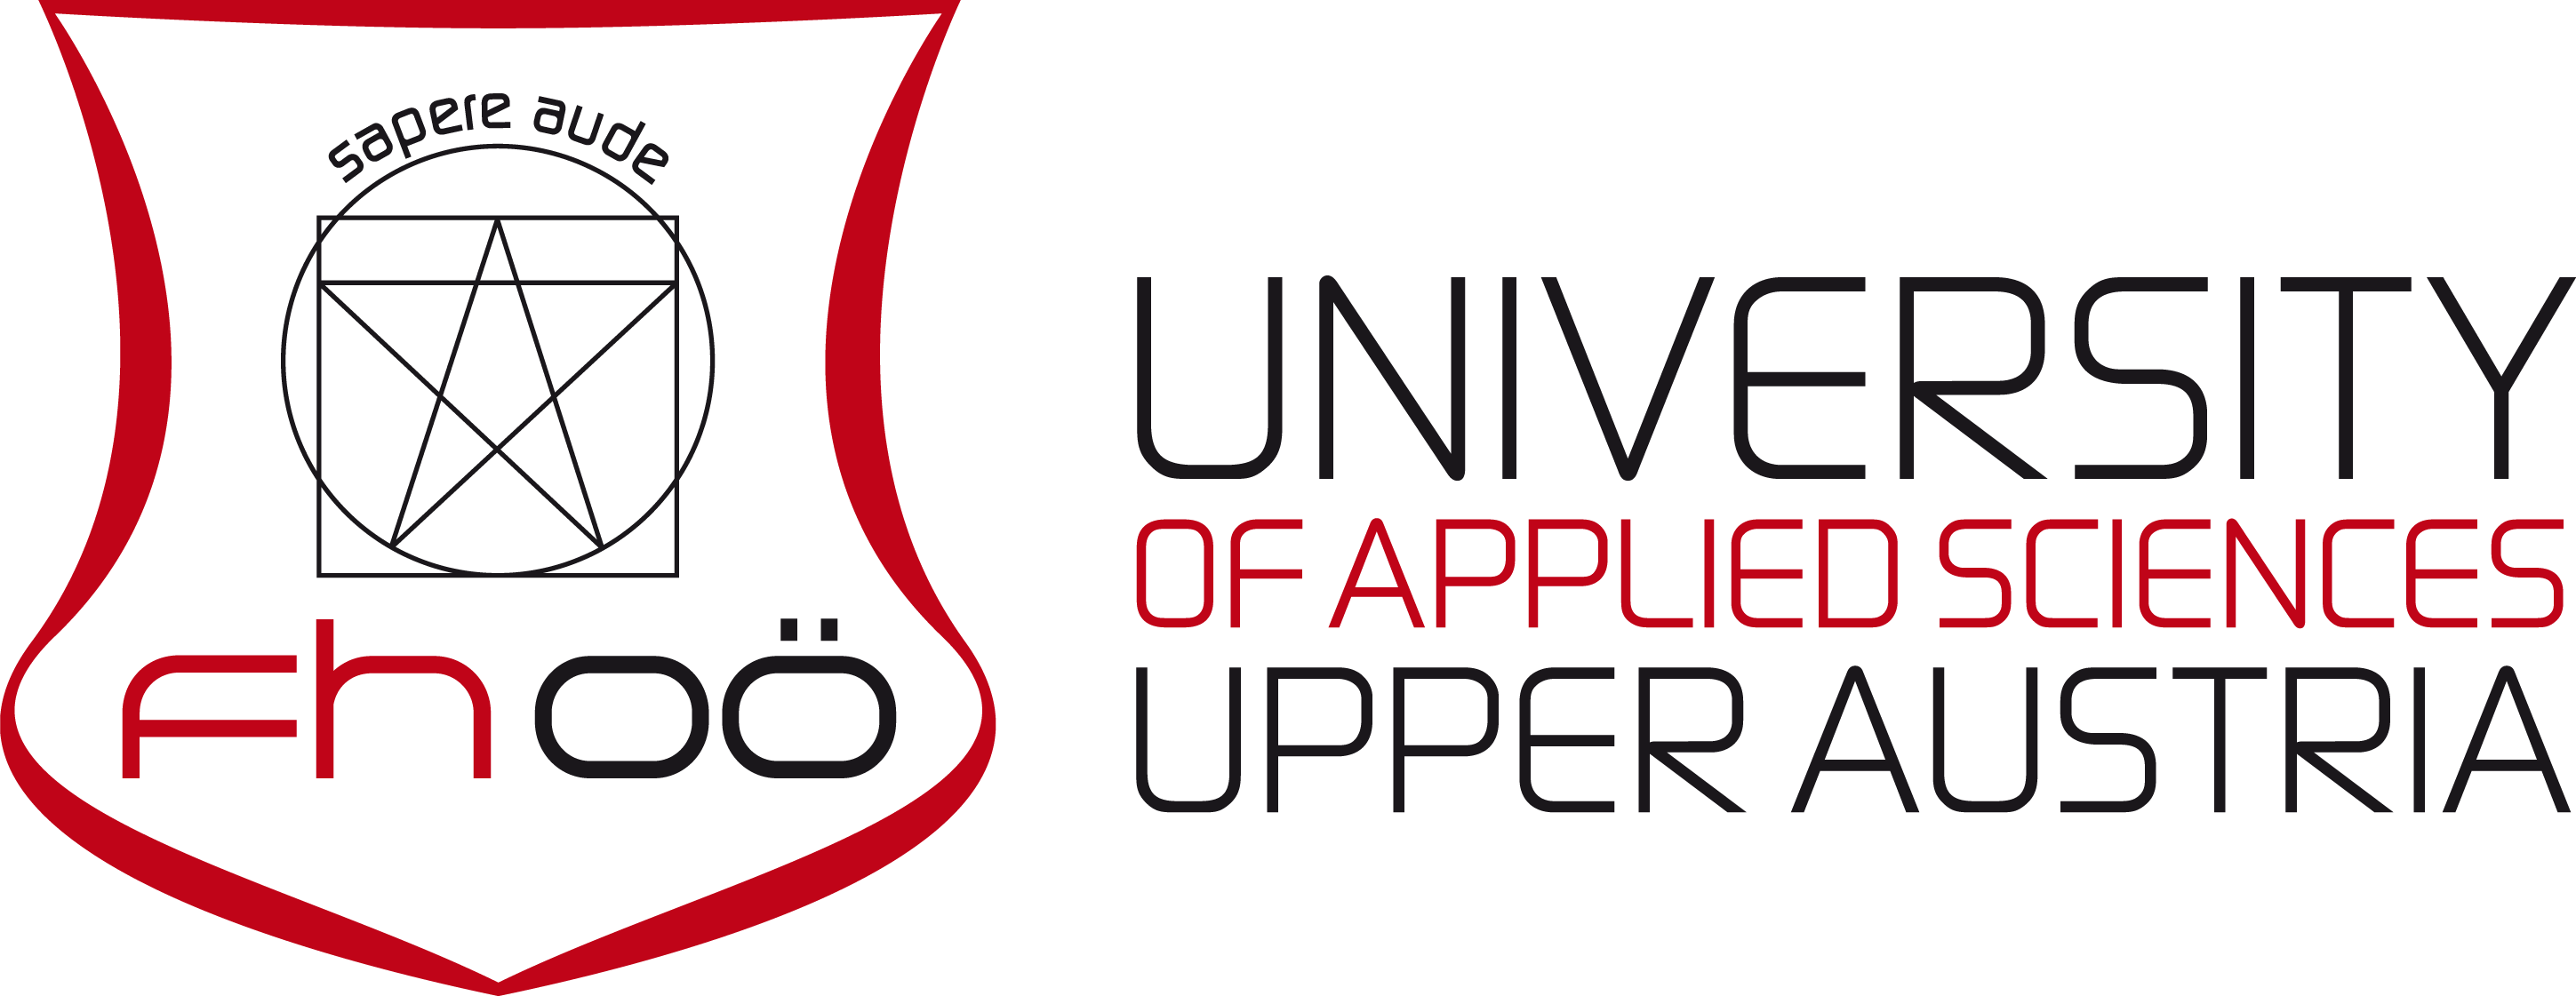 Upper Austria University of Applied Sciences